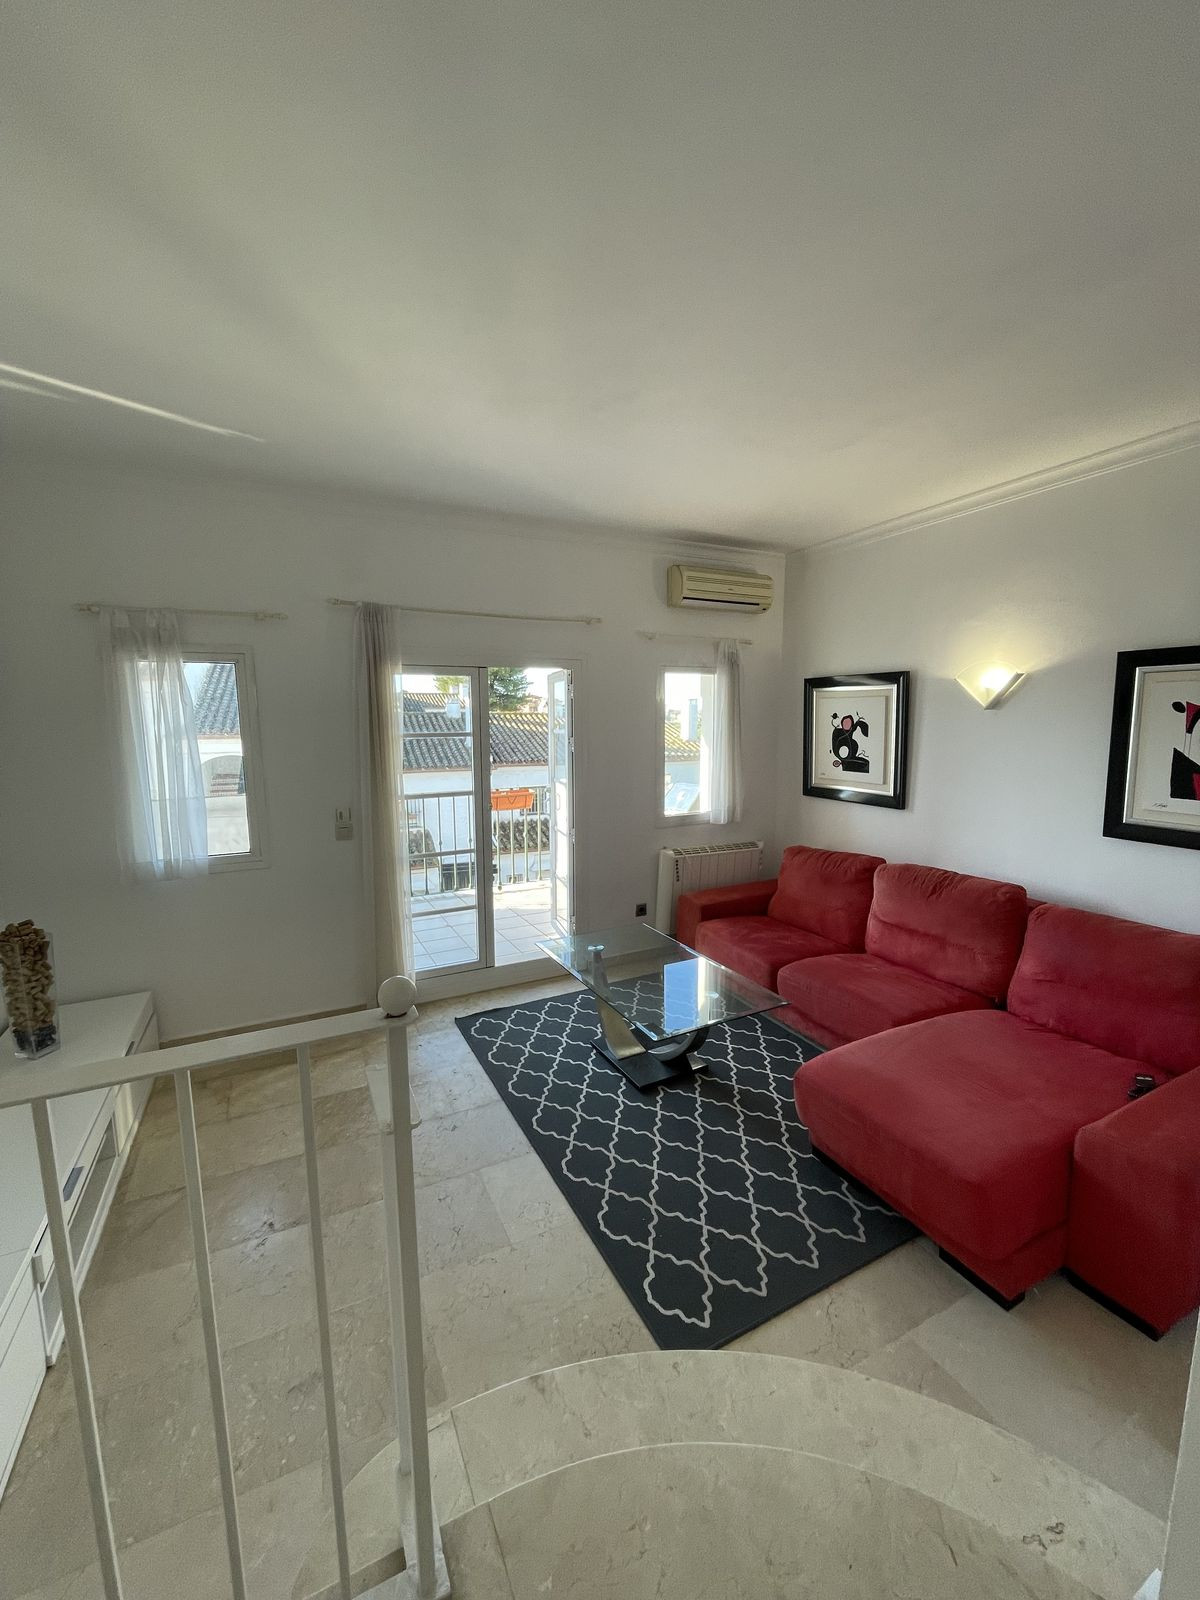 1 bedroom Apartment For Sale in El Paraiso, Málaga - thumb 3